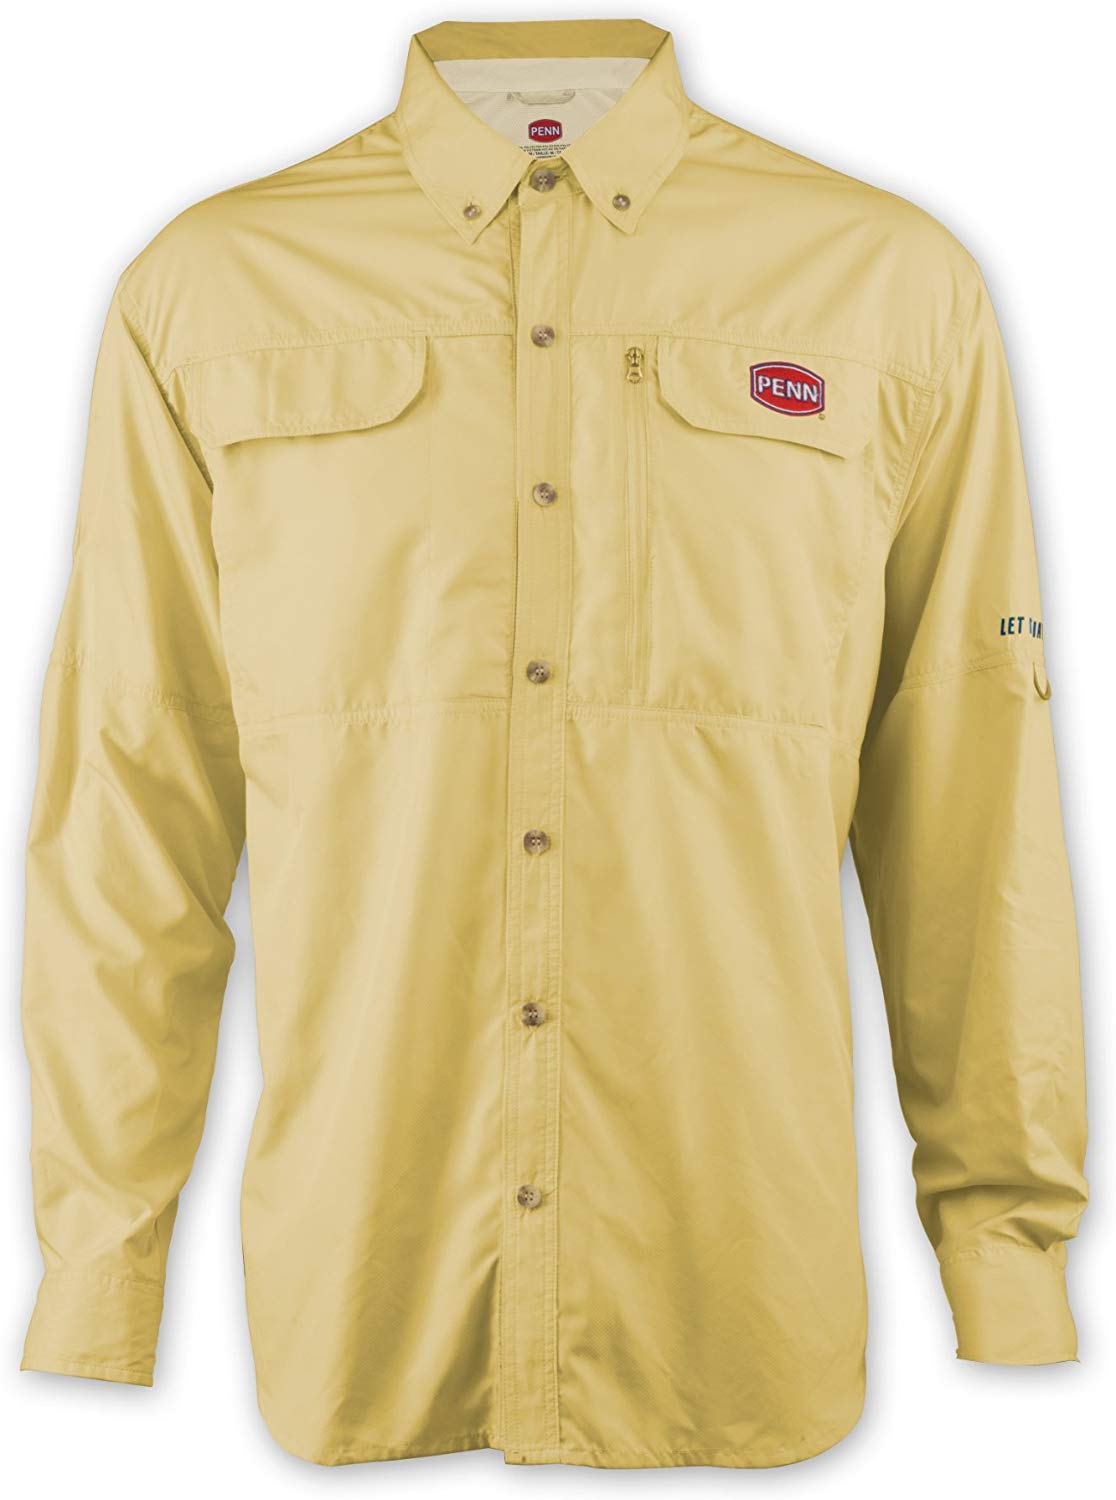 Penn Fishing Long Sleeve Button Down Yellow Performance Shirt, Vented Back  XXL